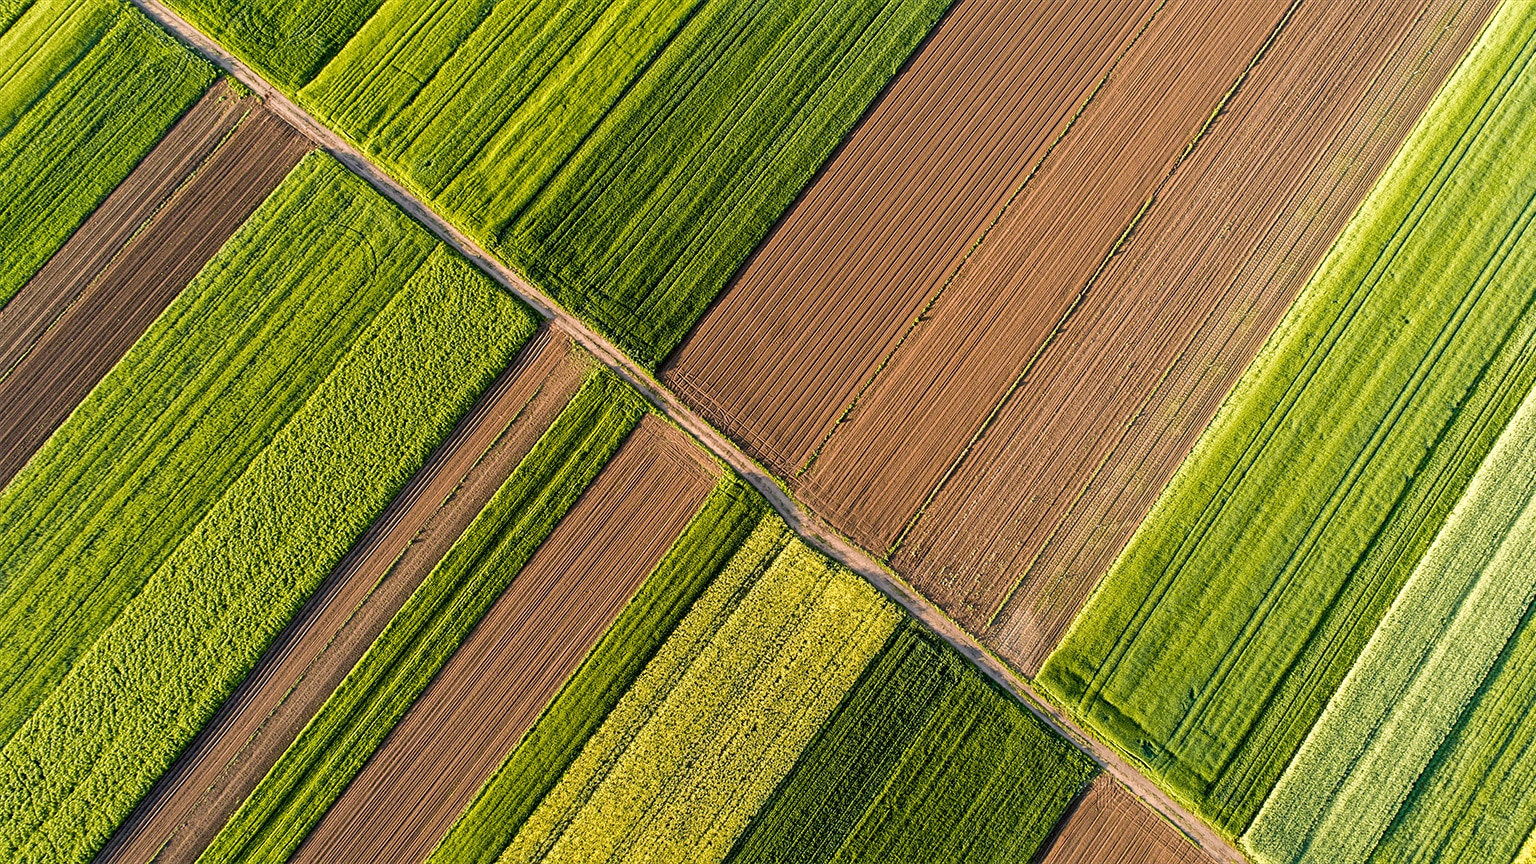 Aerial image of crop fields